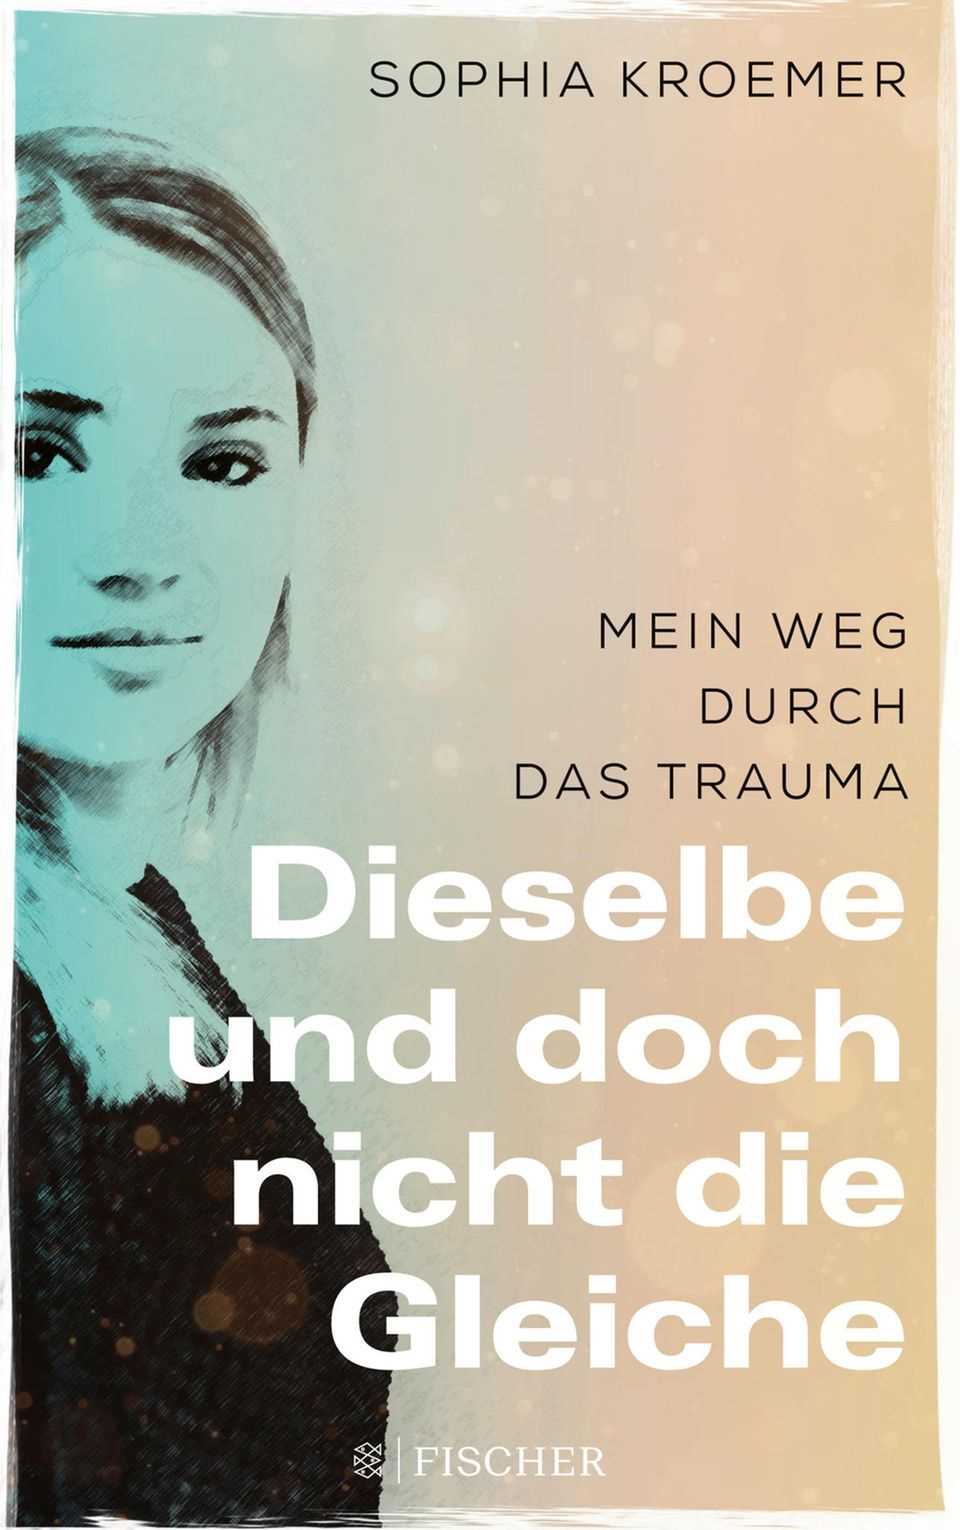 Book cover: My way through the trauma